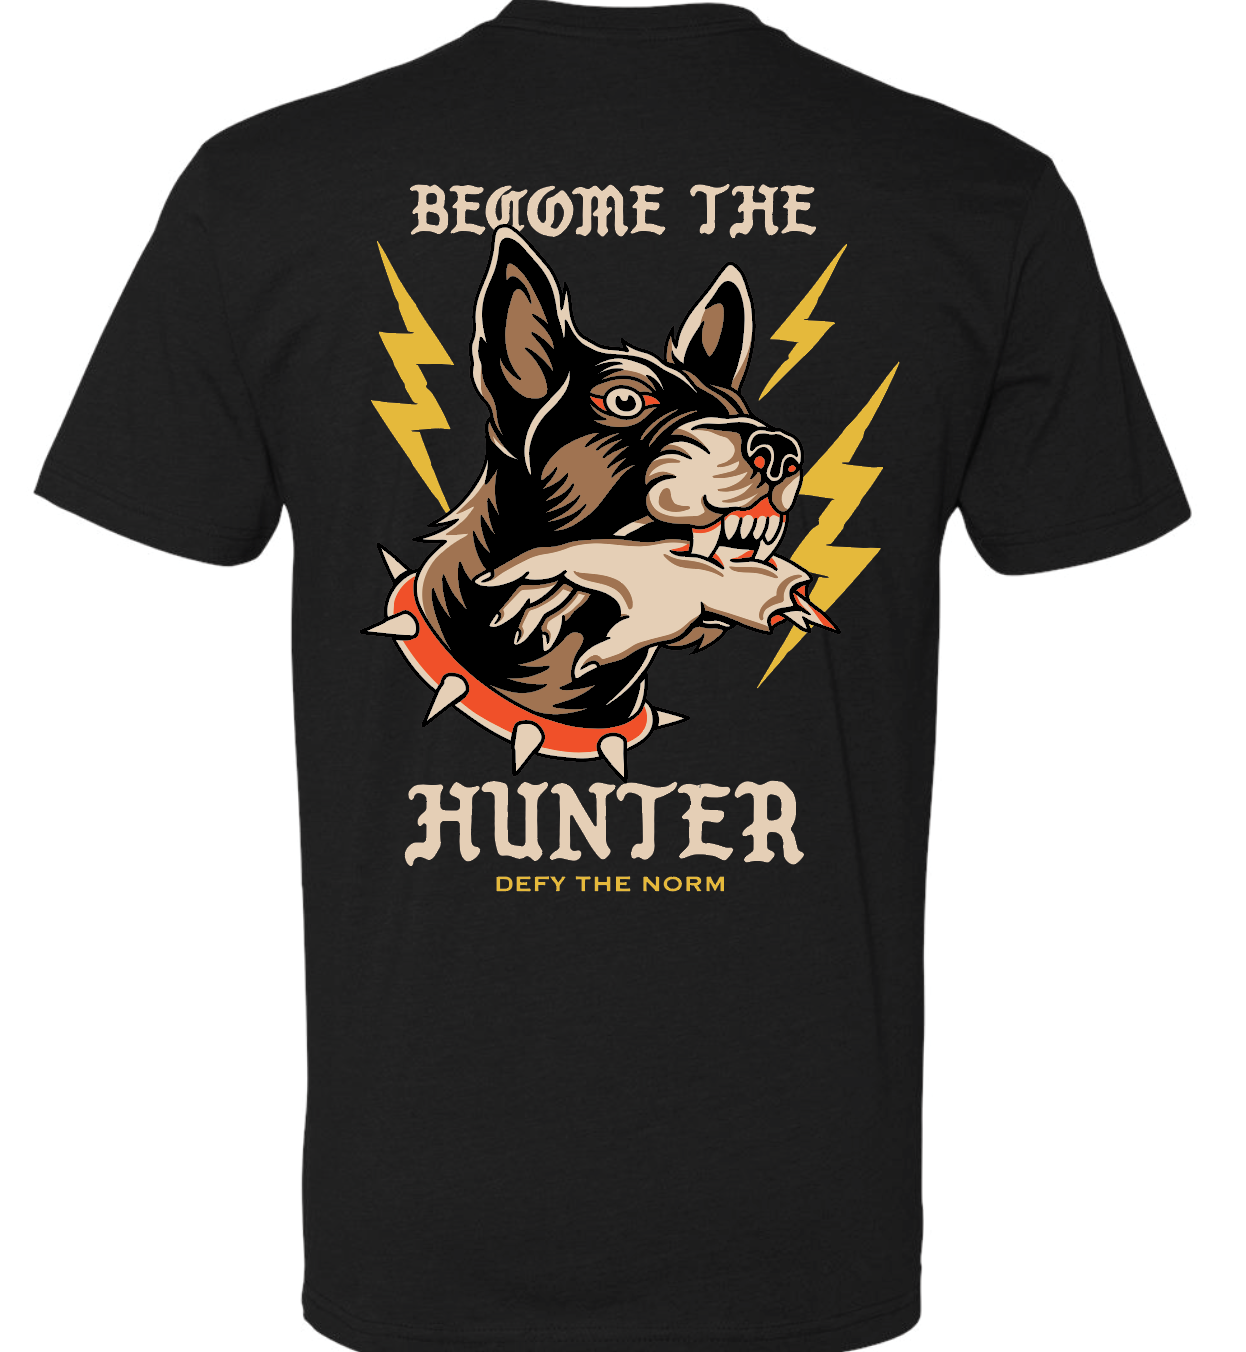 Become The Hunter Tee